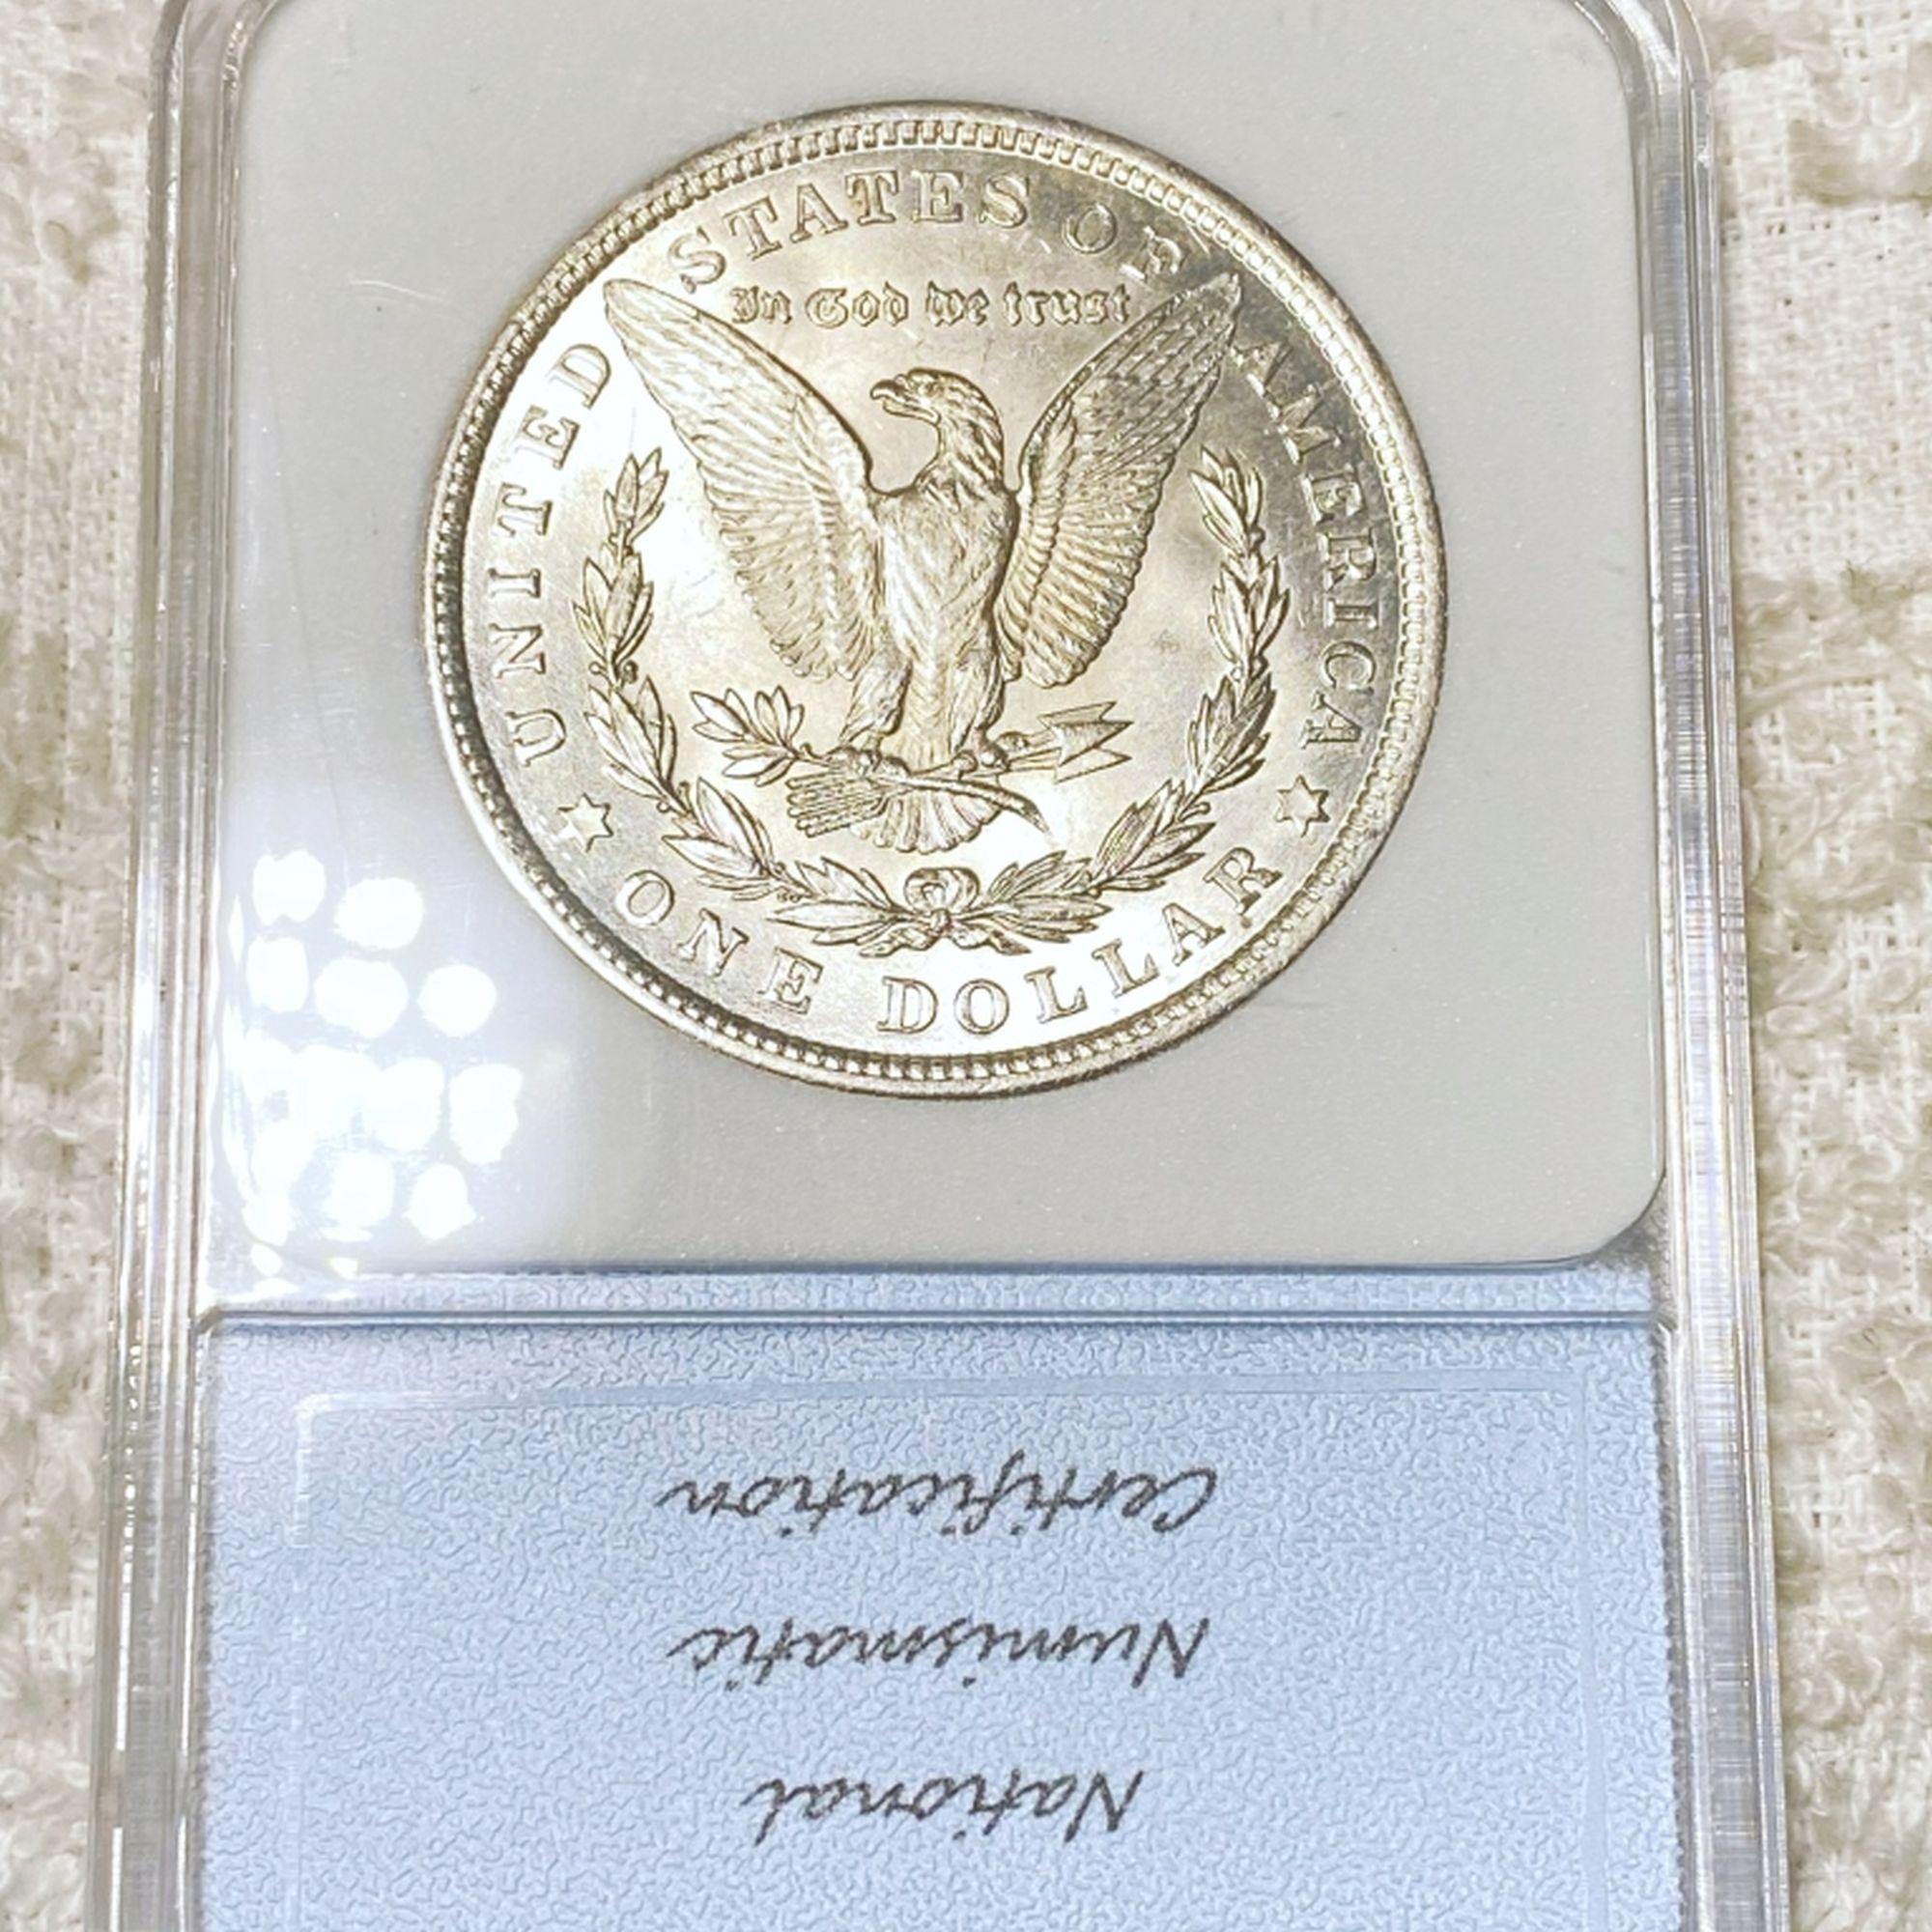 1921 Morgan Silver Dollar NNC - MS65